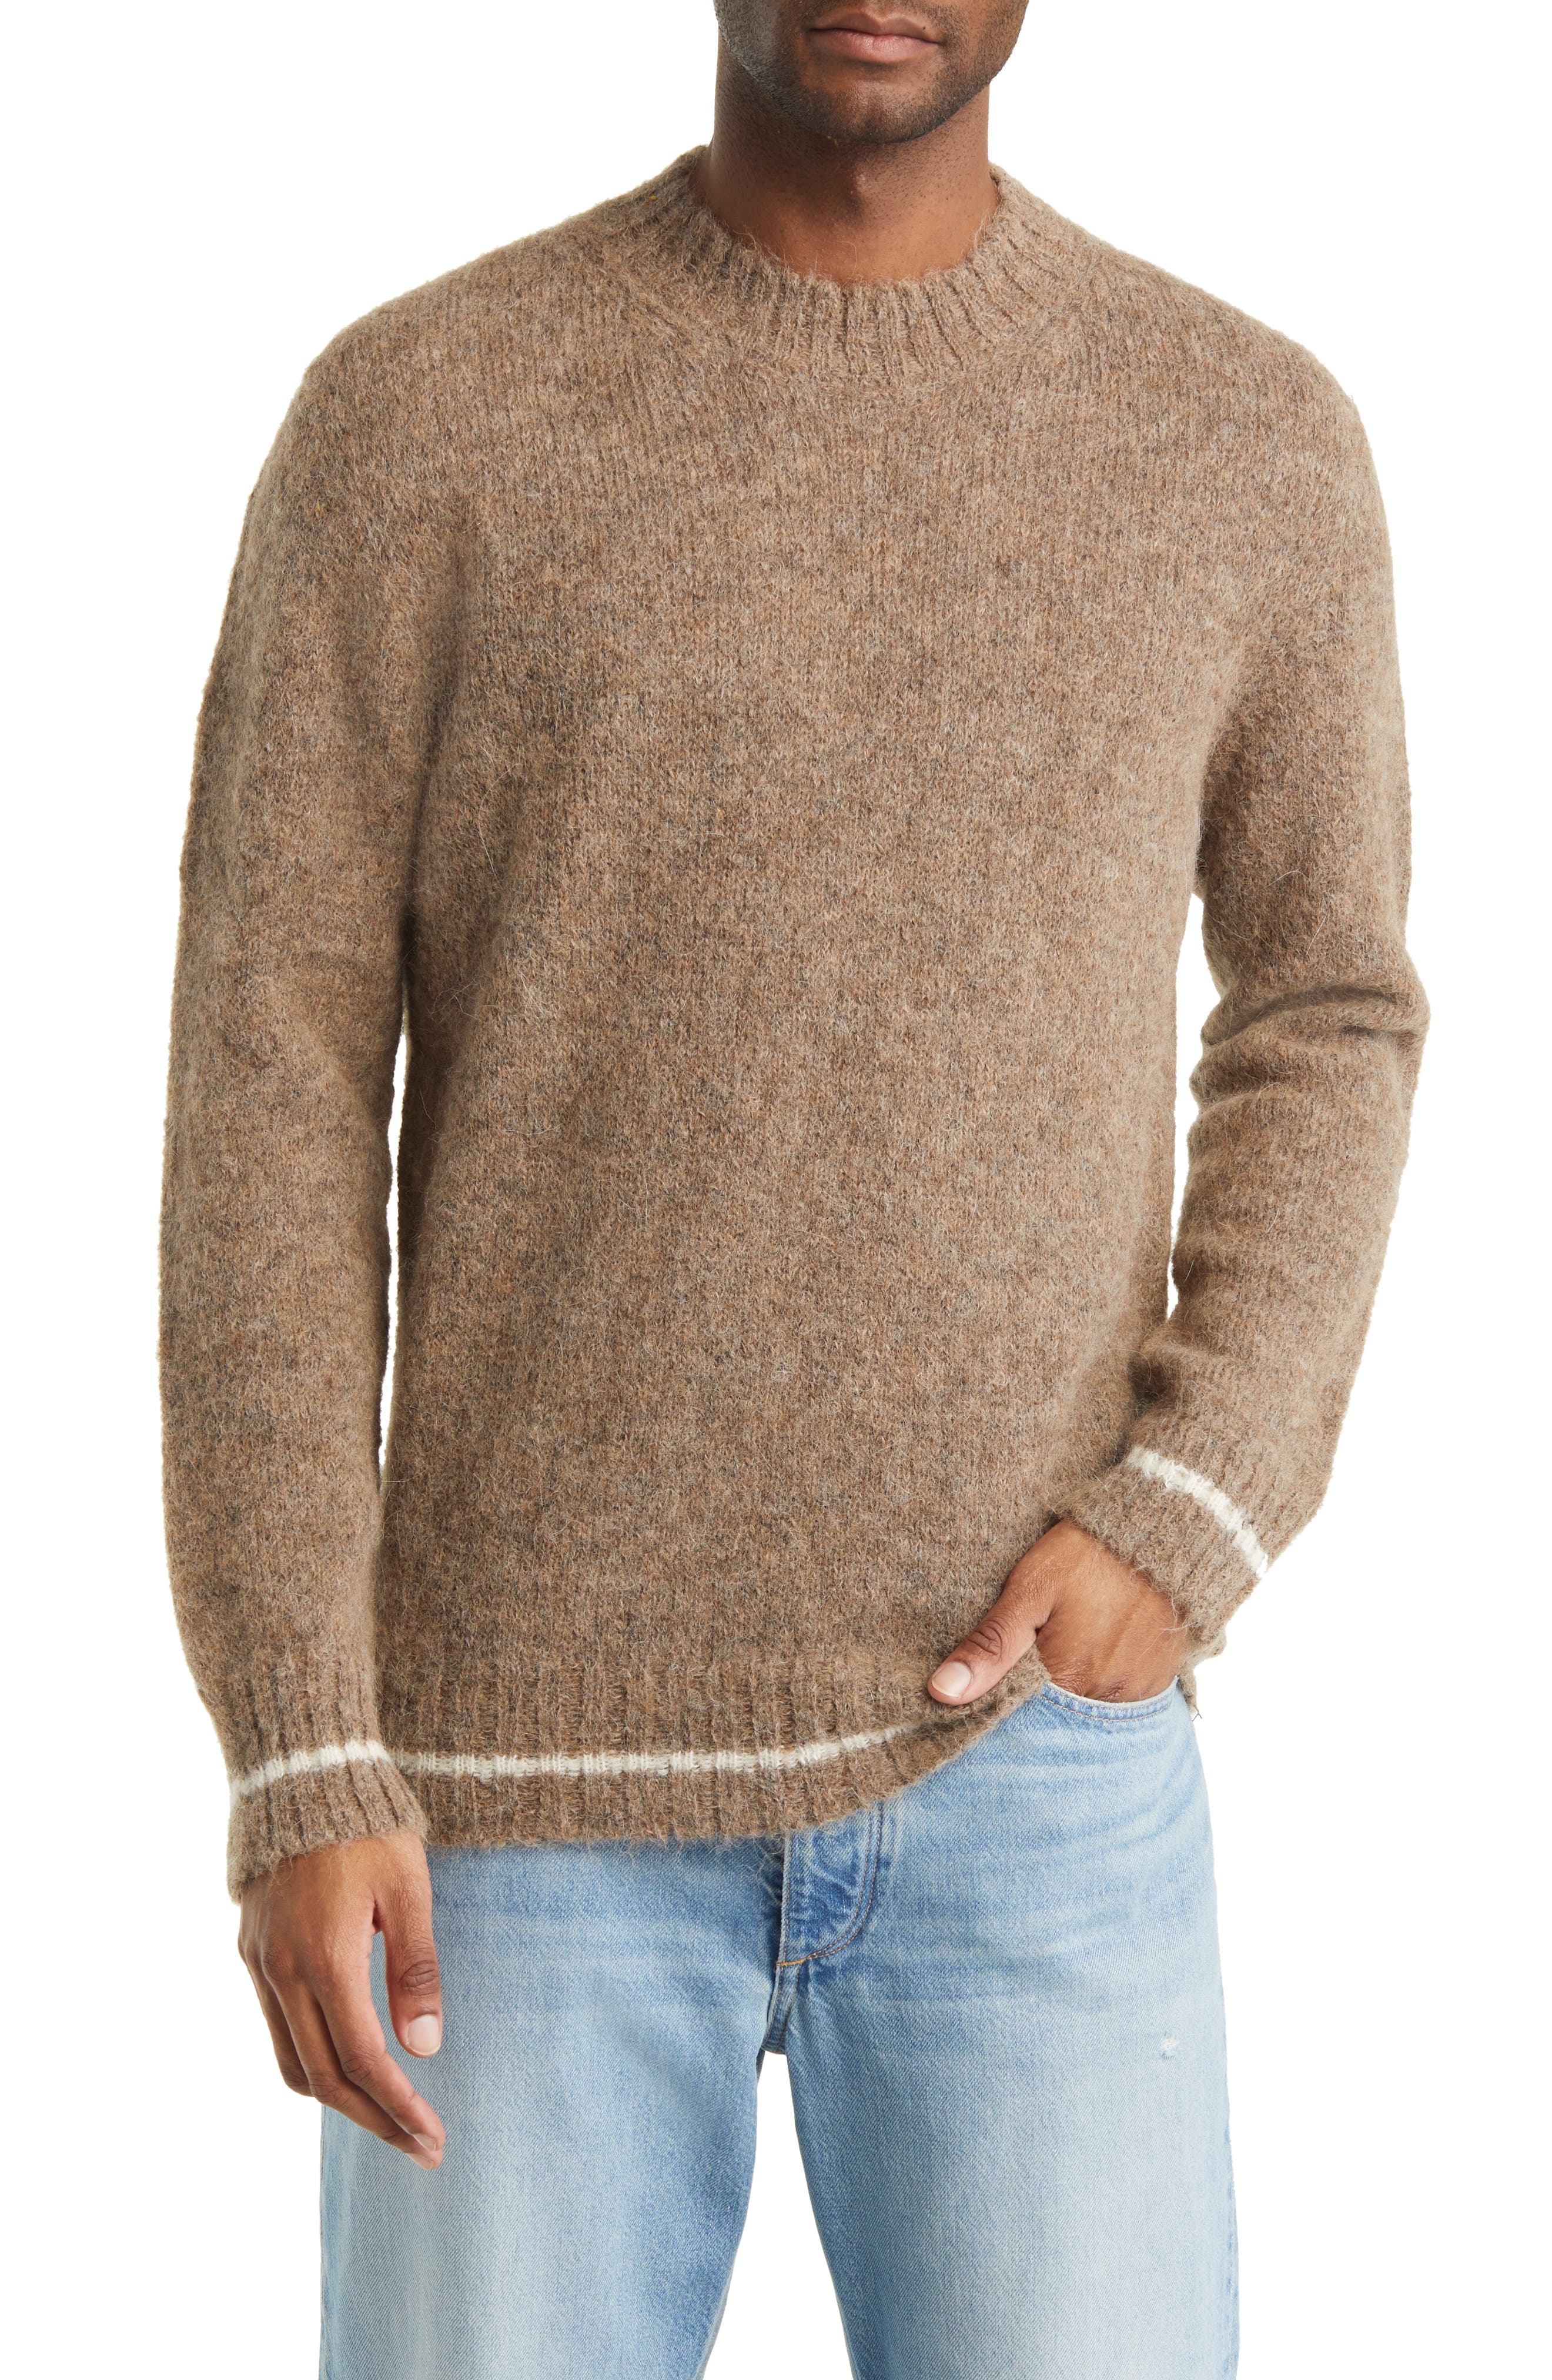 Clothing Gender-Neutral Adult Clothing Jumpers Advanced Alpaca Wool Turtleneck Sweater Unisex Knitwear Gifts 100% Alpaca Wool DAIFA 